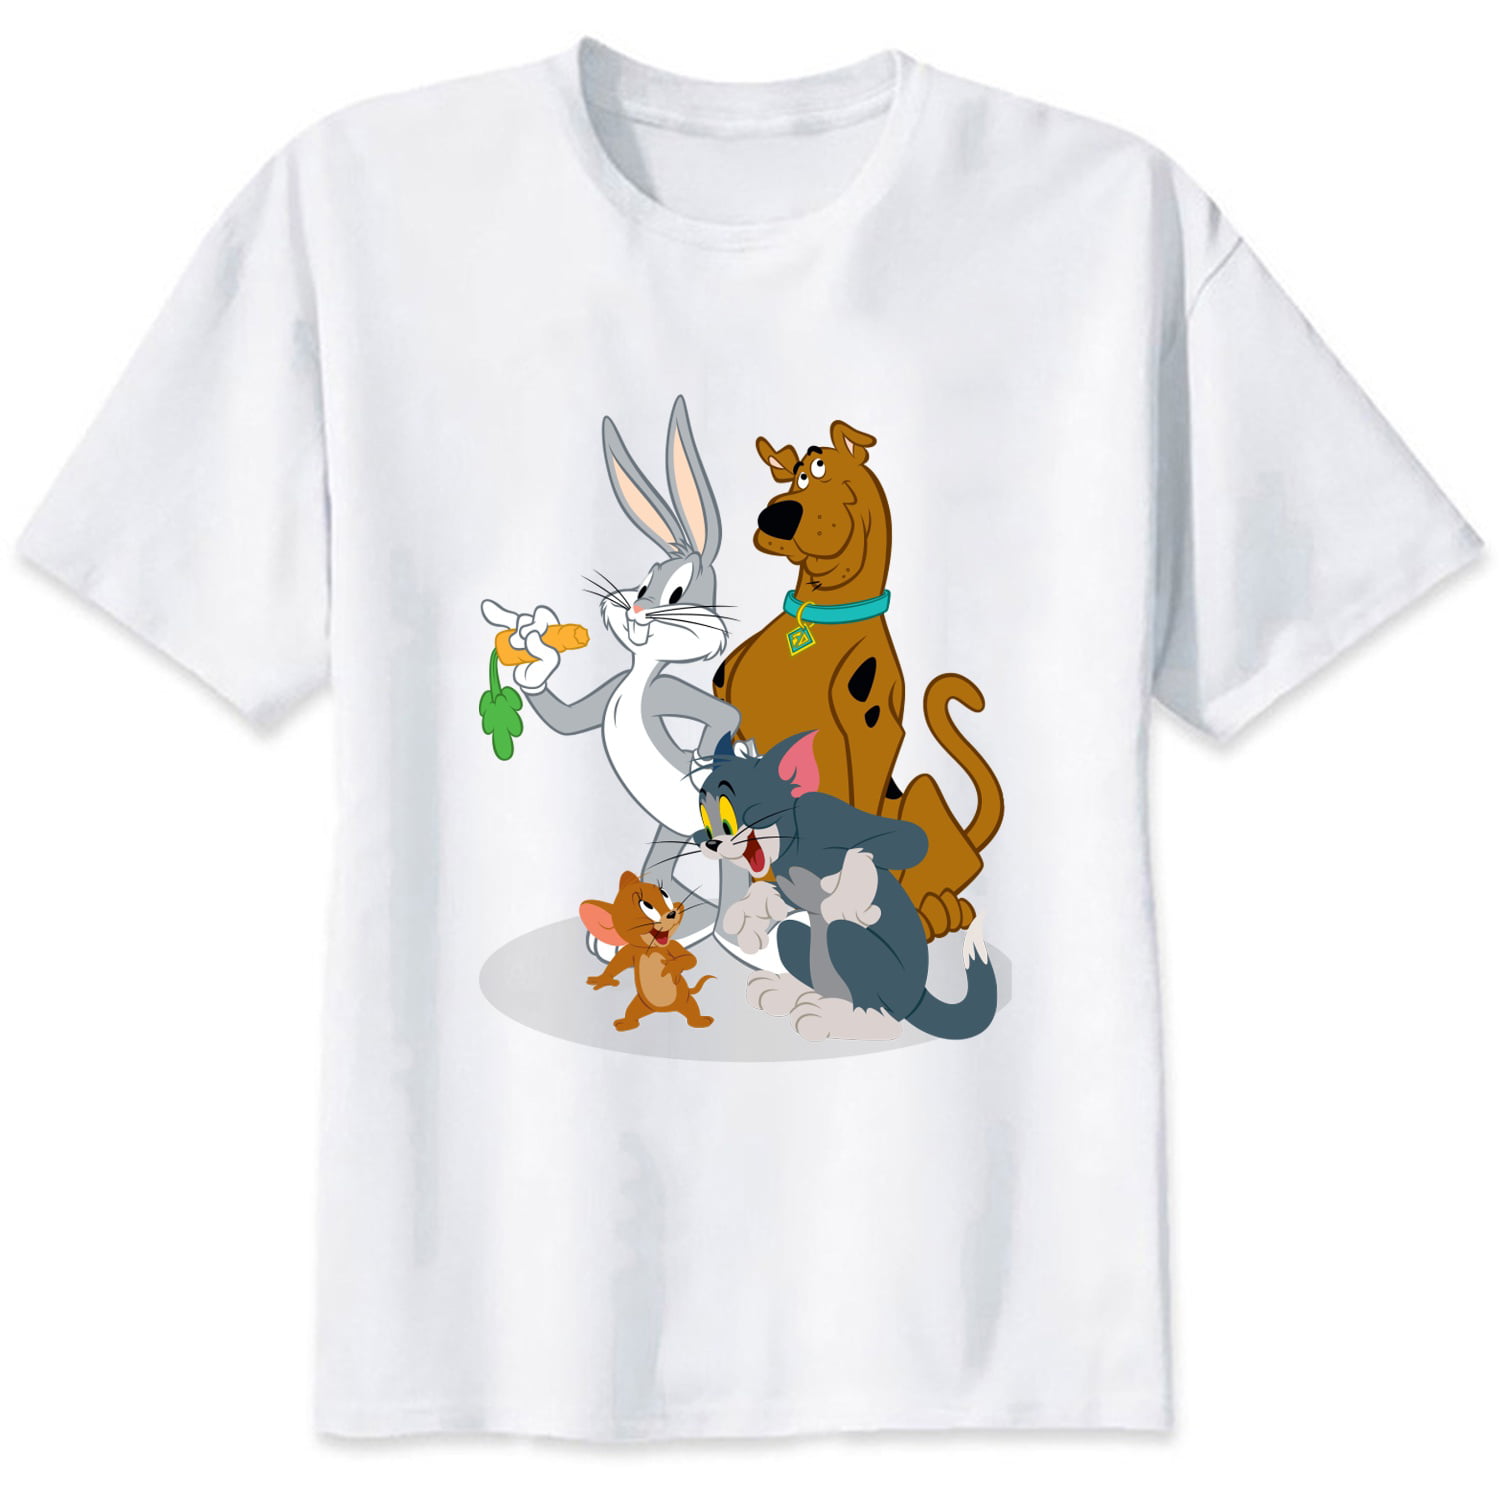 4-14 Years Boys Short Sleeve Clothing Baby Print T-shirt Looney Tunes Tops Cartoon Clothes Girl Children T-shirt